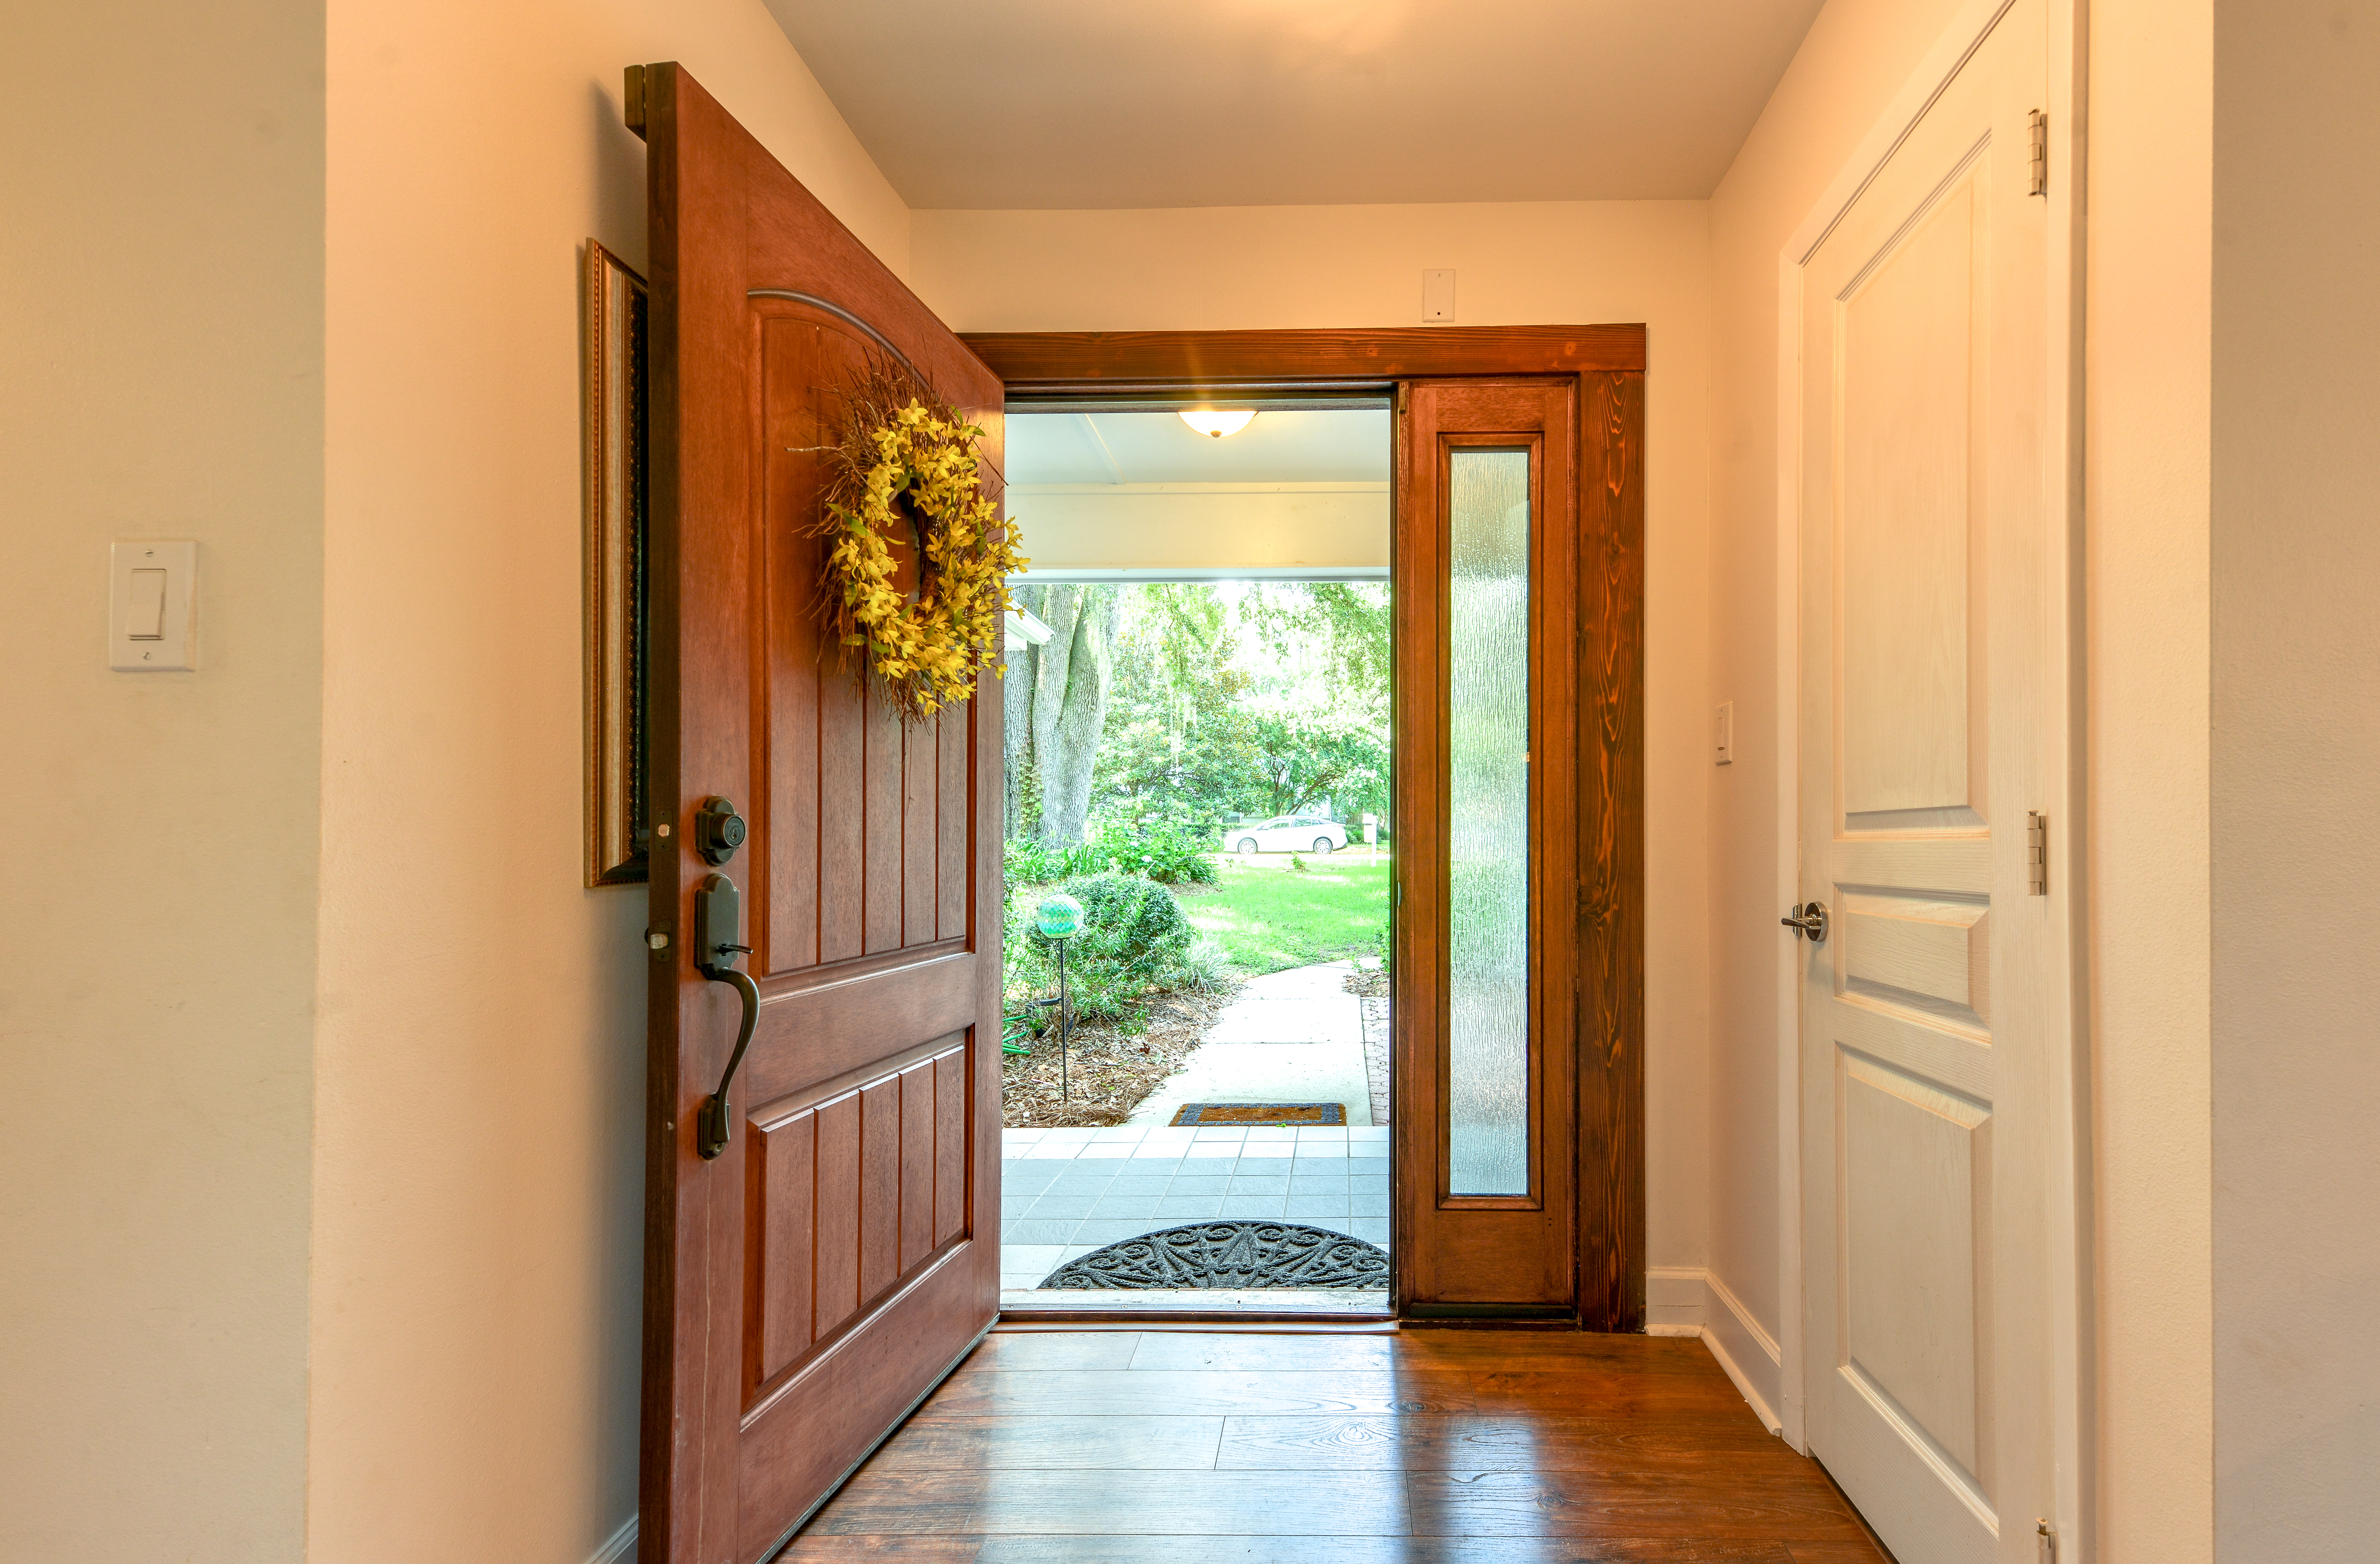 An open front door with a wreath above | Source: Shutterstock